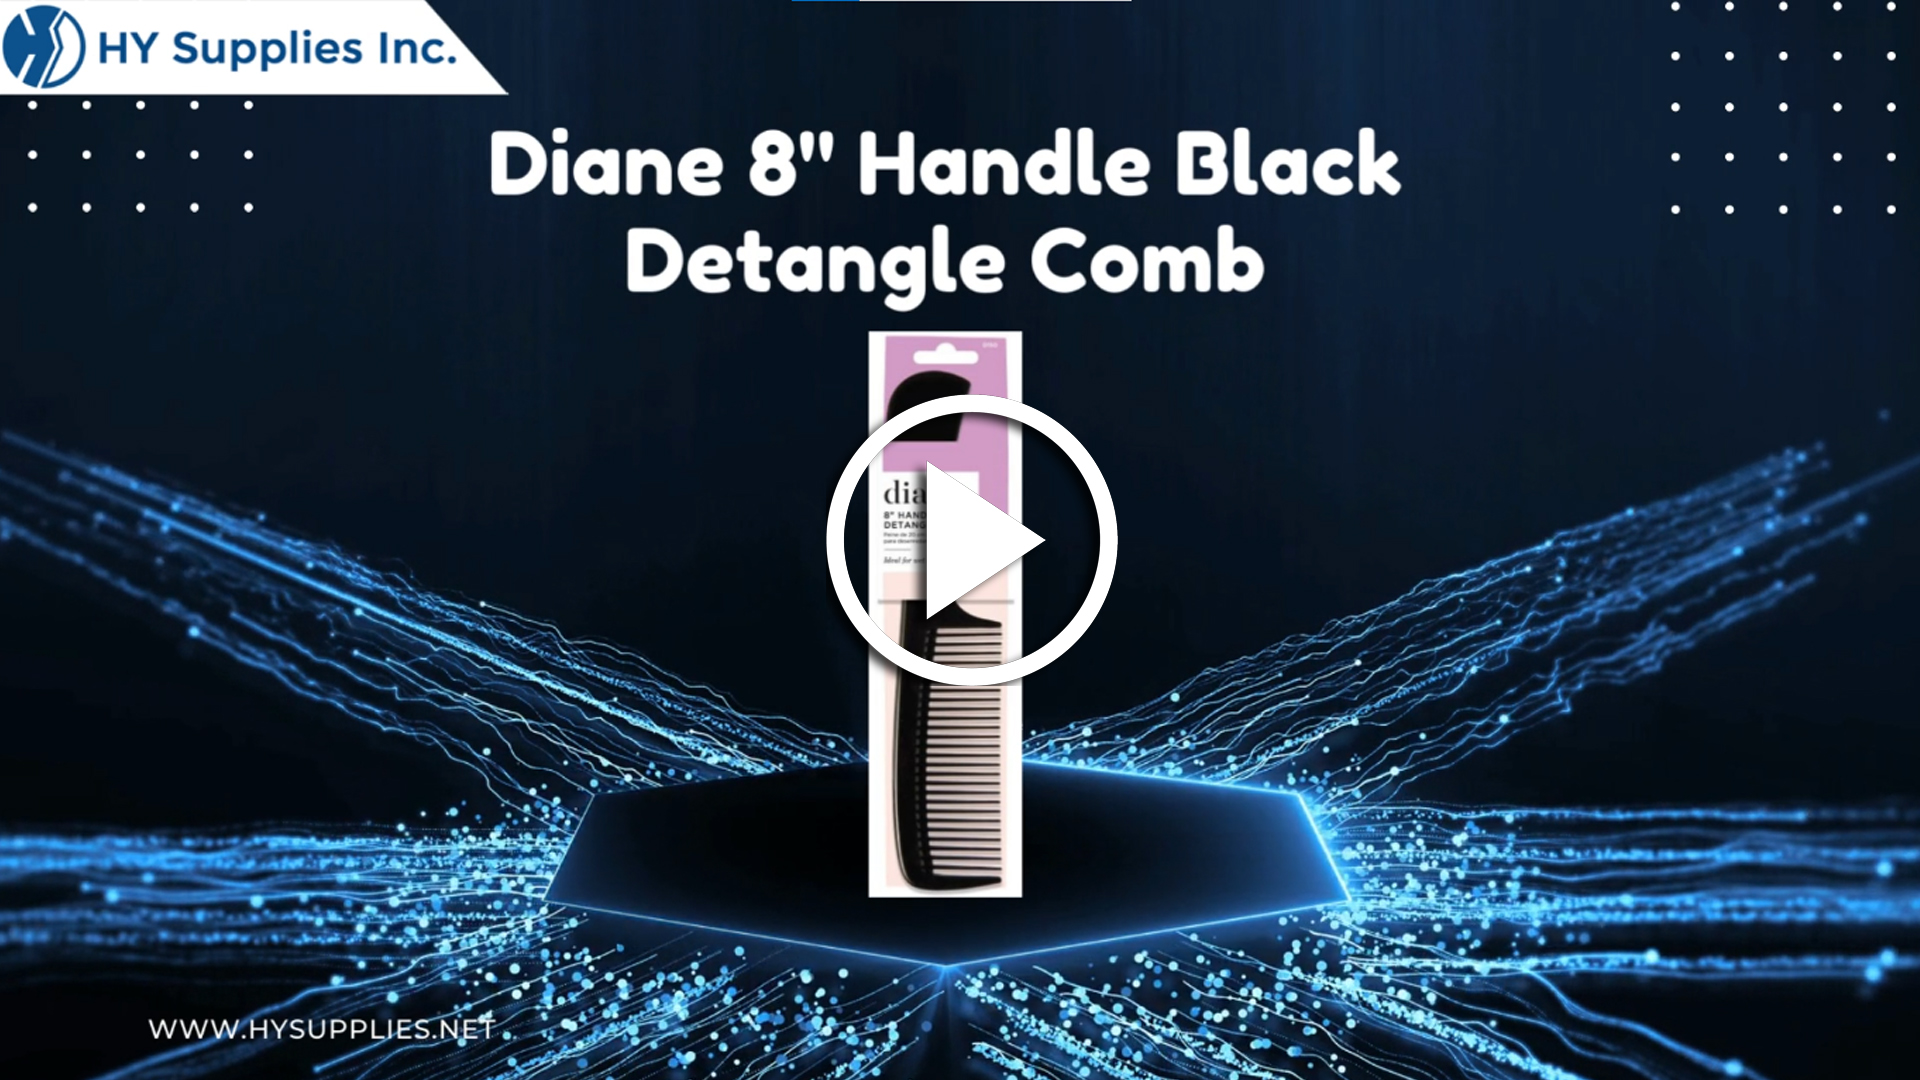 Diane 8" Handle Black Detangle Comb